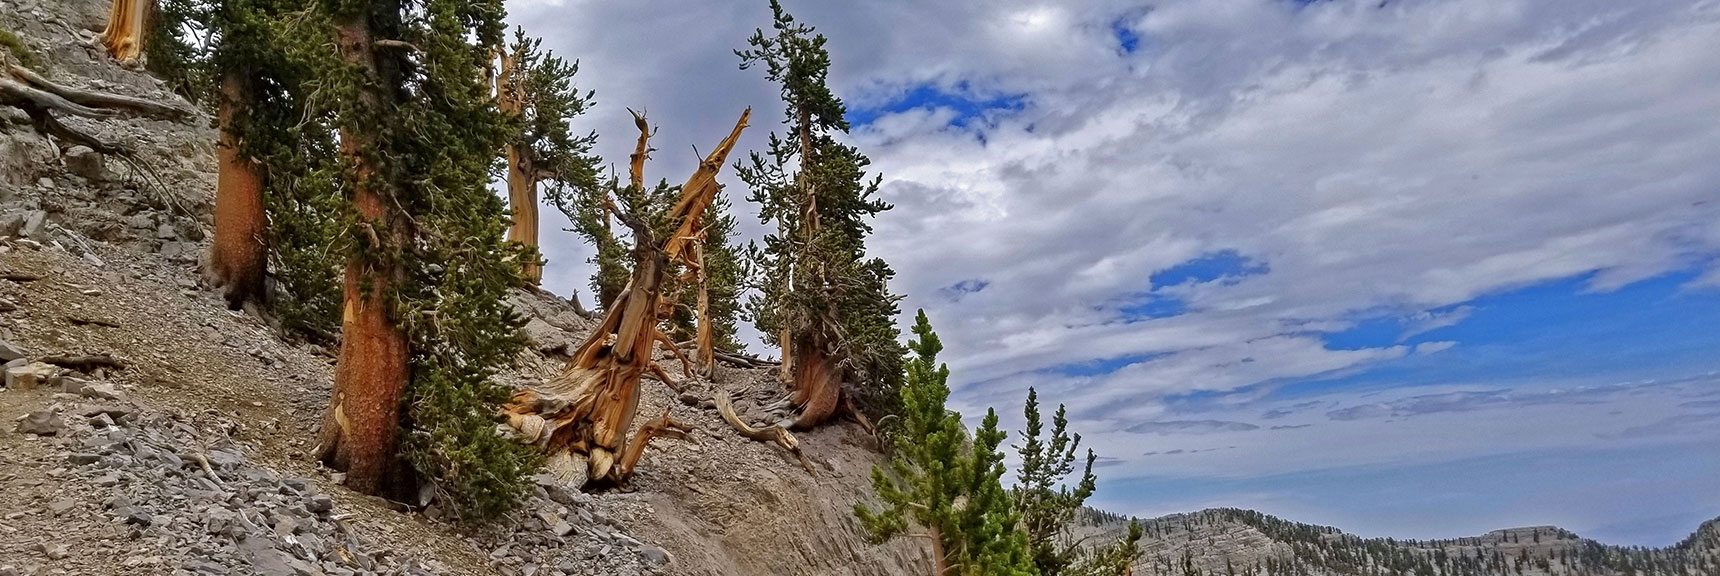 Turn Around to See Bristlecone Pine Sculptures you Missed | Lee and Charleston Peaks via Lee Canyon Mid Ridge | Mt Charleston Wilderness | Spring Mountains, Nevada